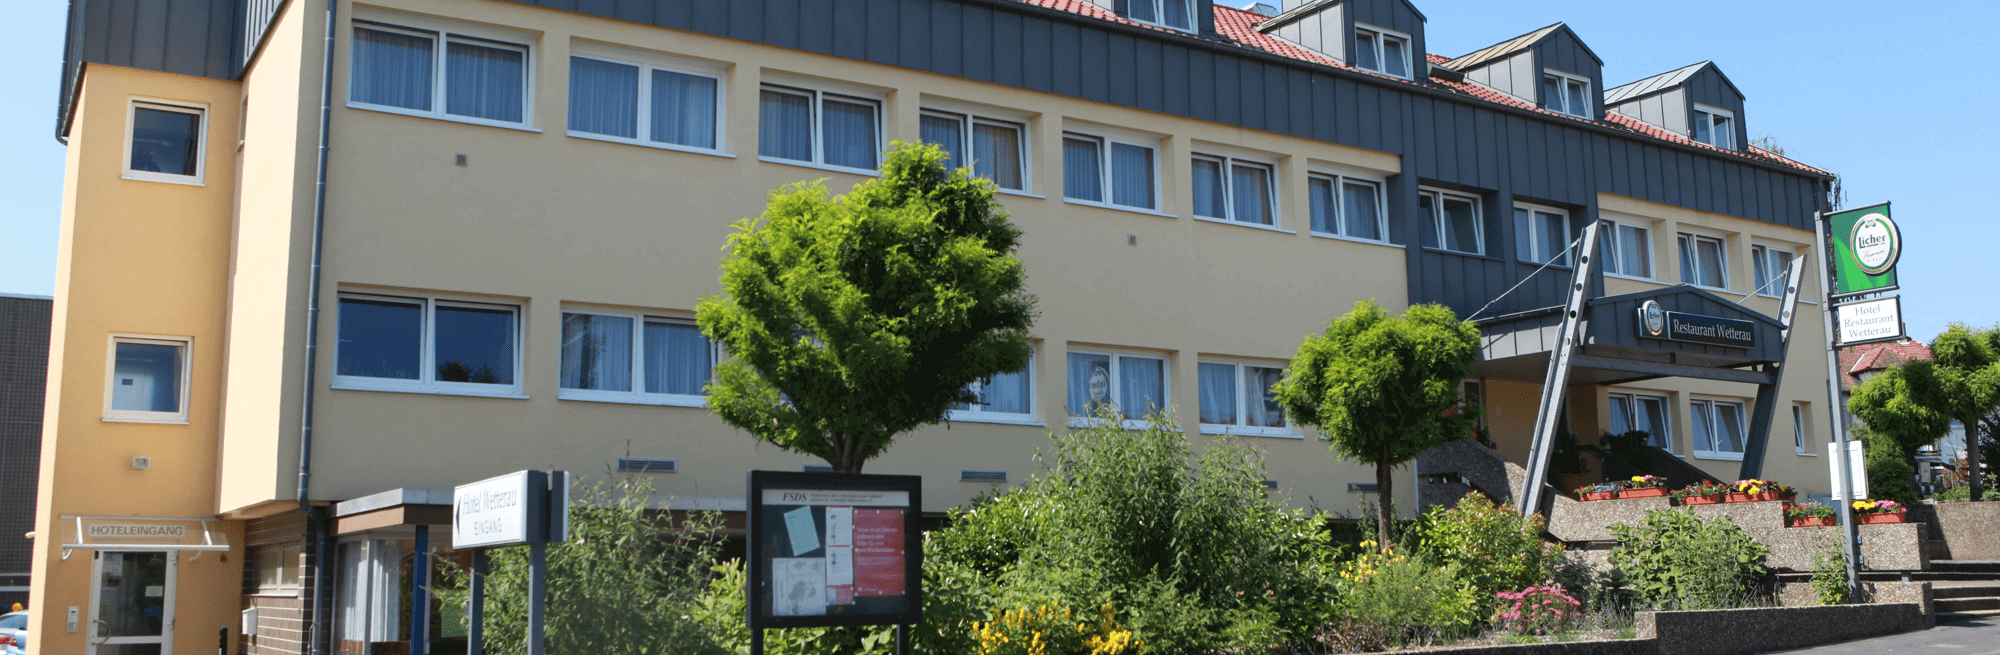 Hotel & Restaurant Wetterau in Wölfersheim bei Lißberg